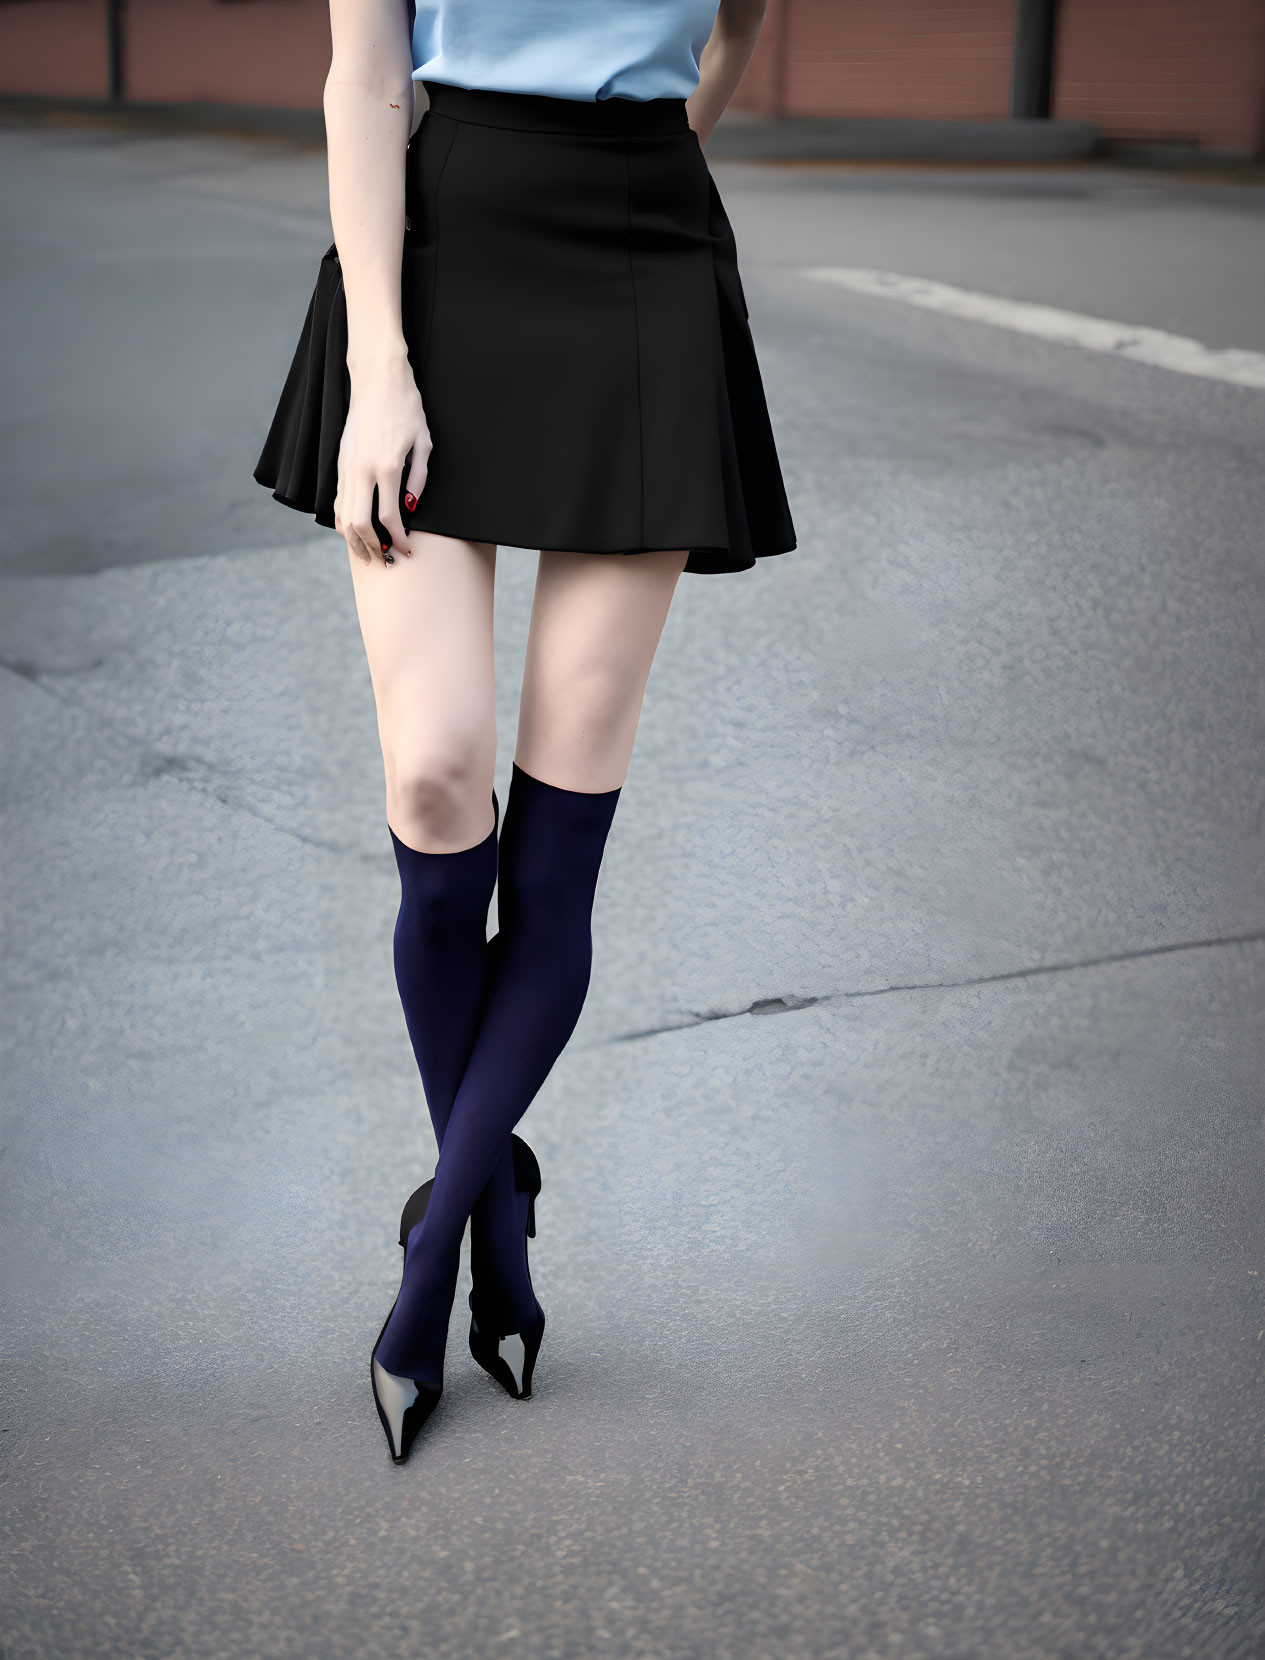 Person in Black Pleated Skirt and Blue Socks on Asphalt Road